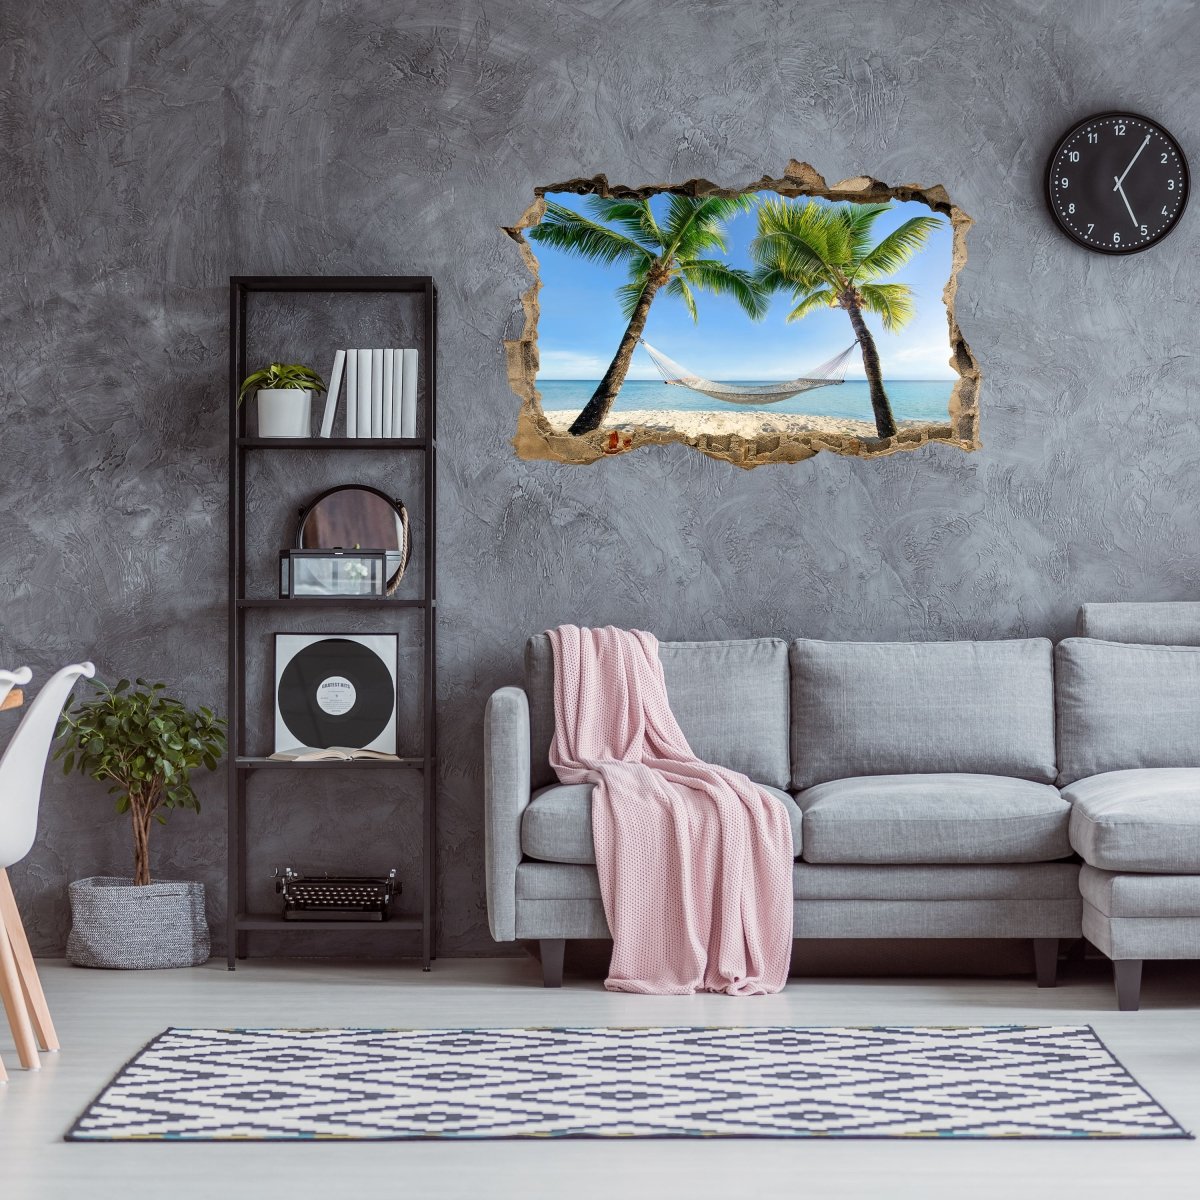 3D wall sticker hammock between palm trees, sea, island - Wall Decal M1153